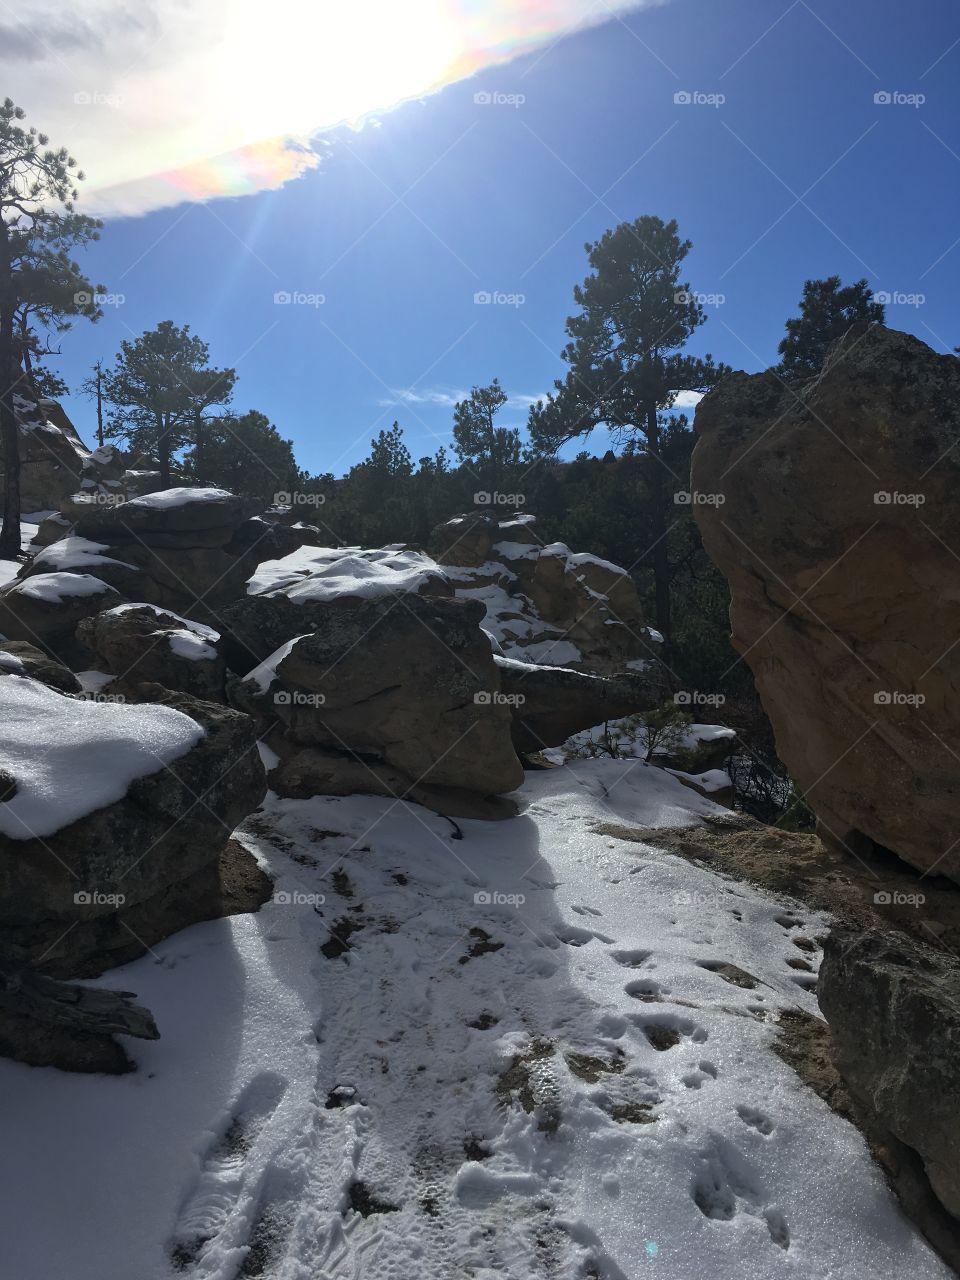 Snowy rocks
